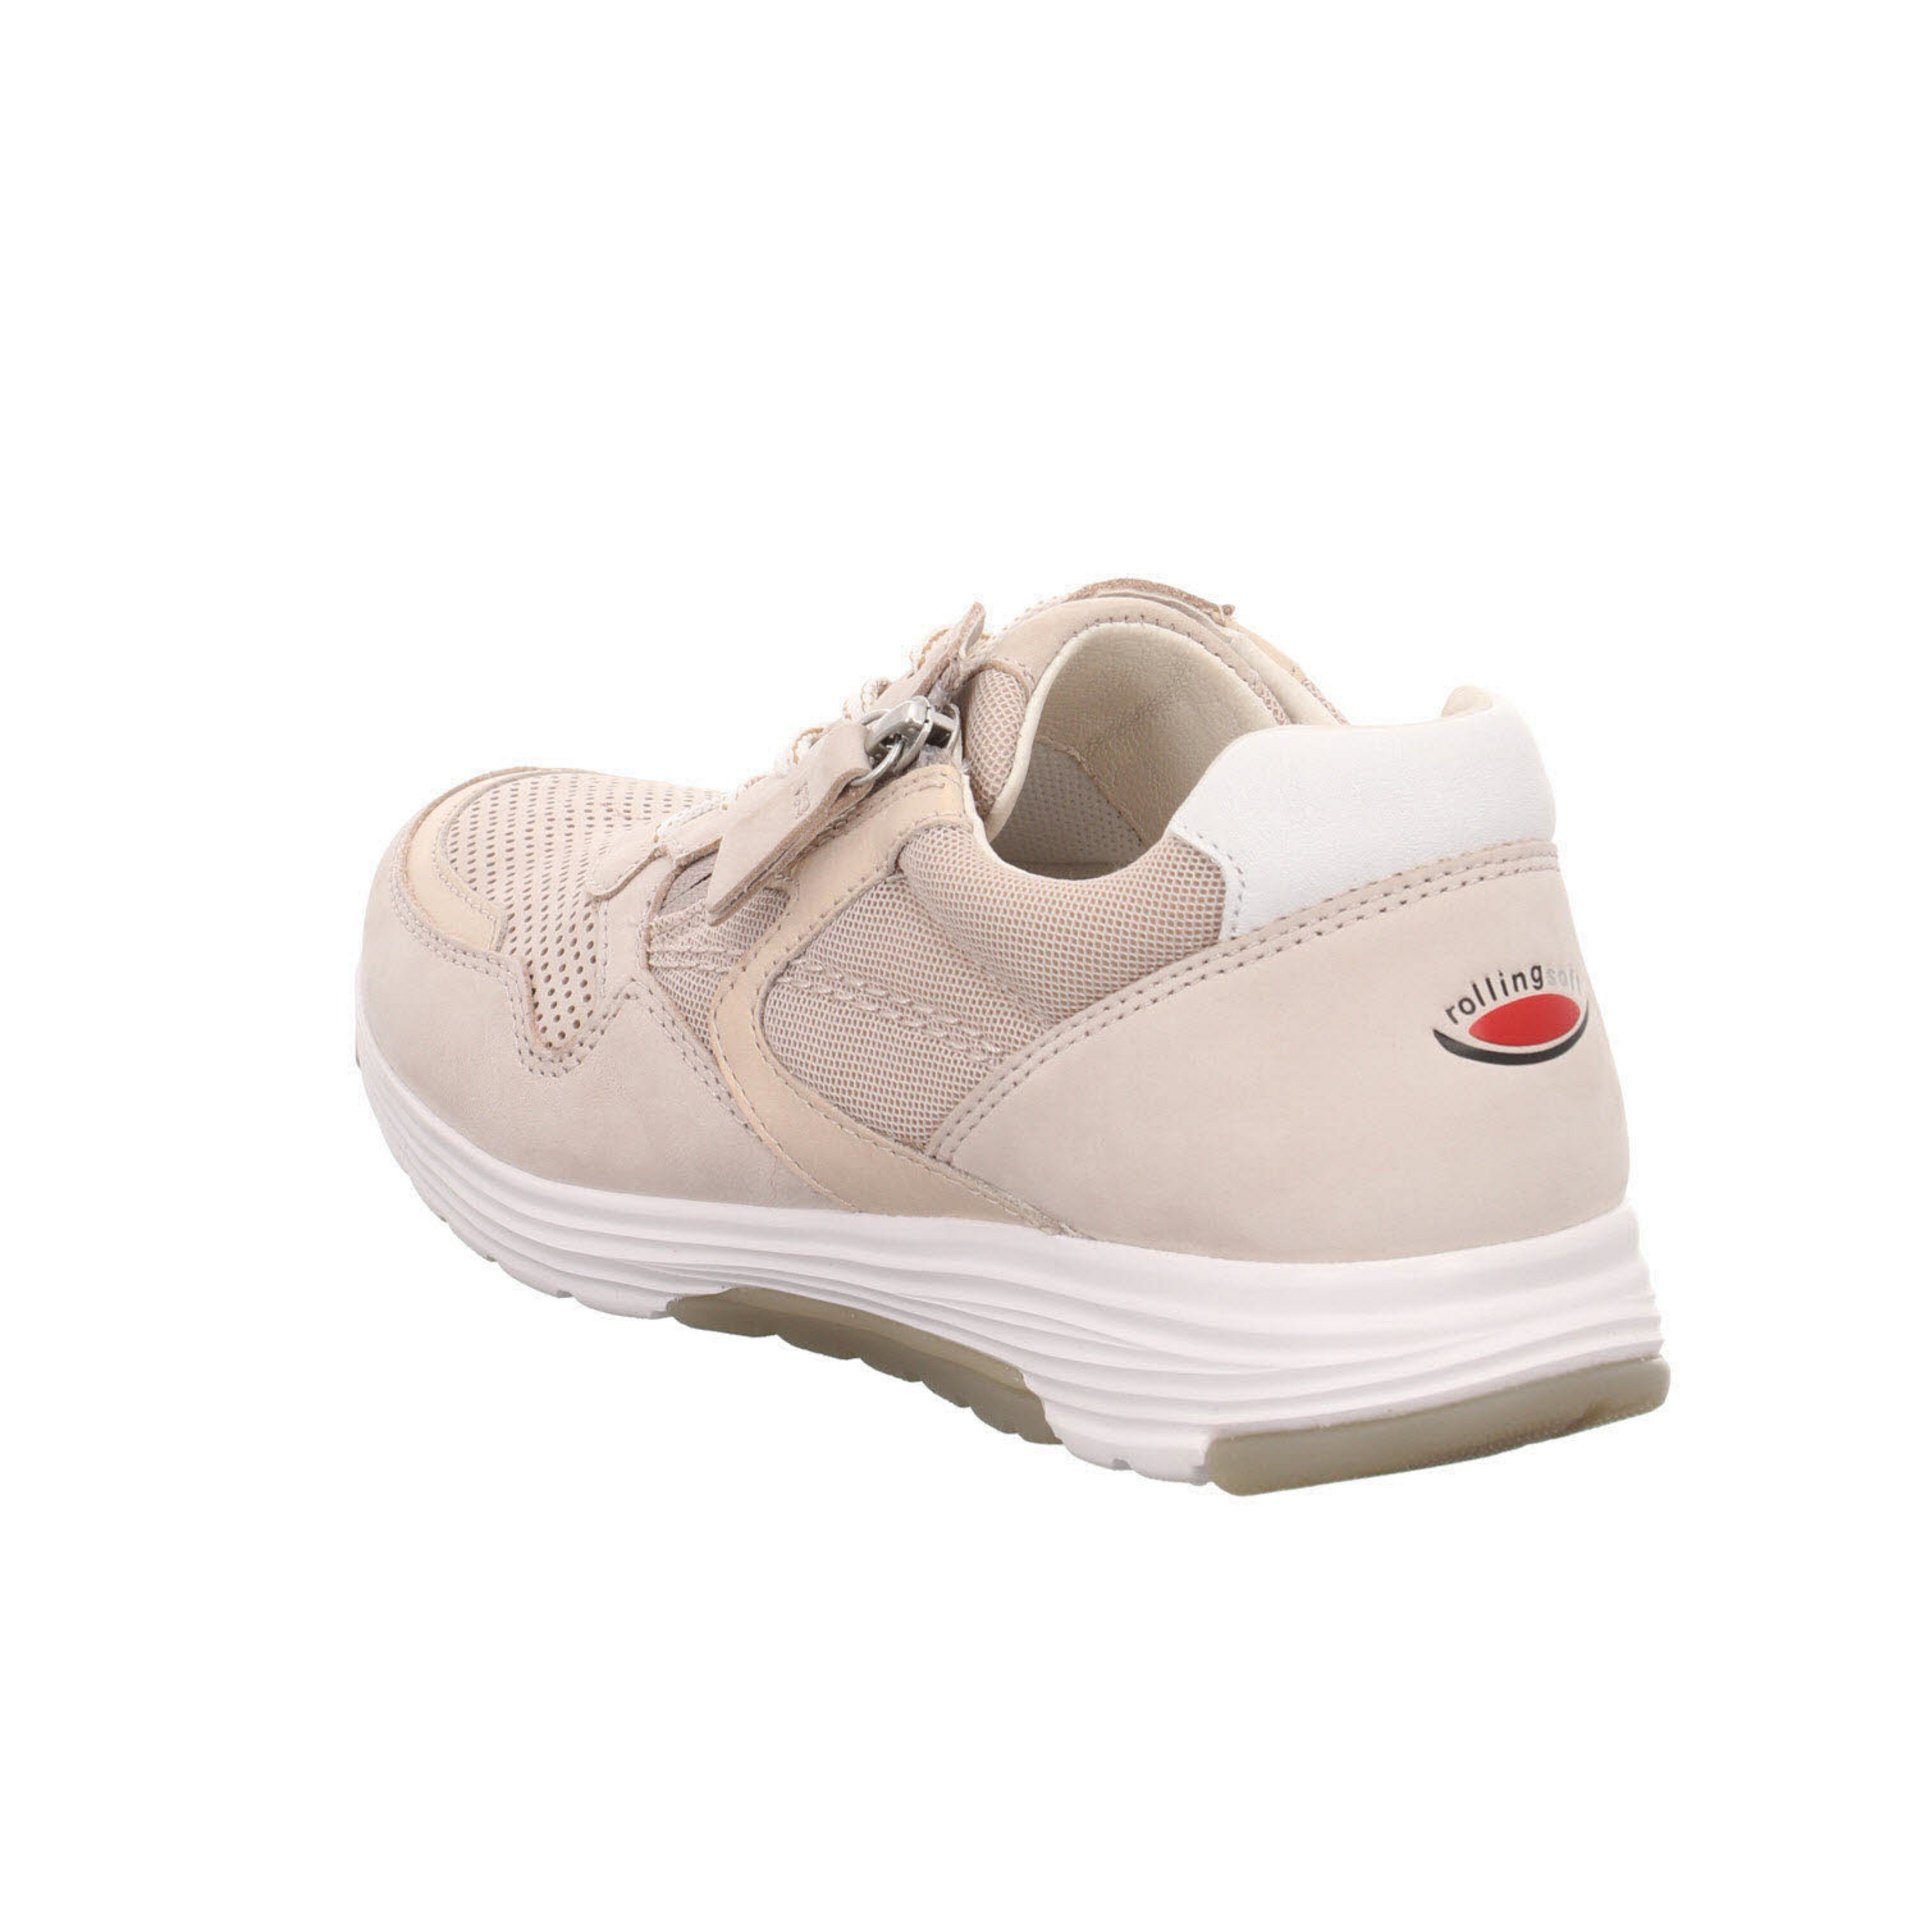 Gabor Damen Sneaker Schuhe (puder.weiss) Beige Rollingsoft Sneaker Schnürschuh Leder-/Textilkombination